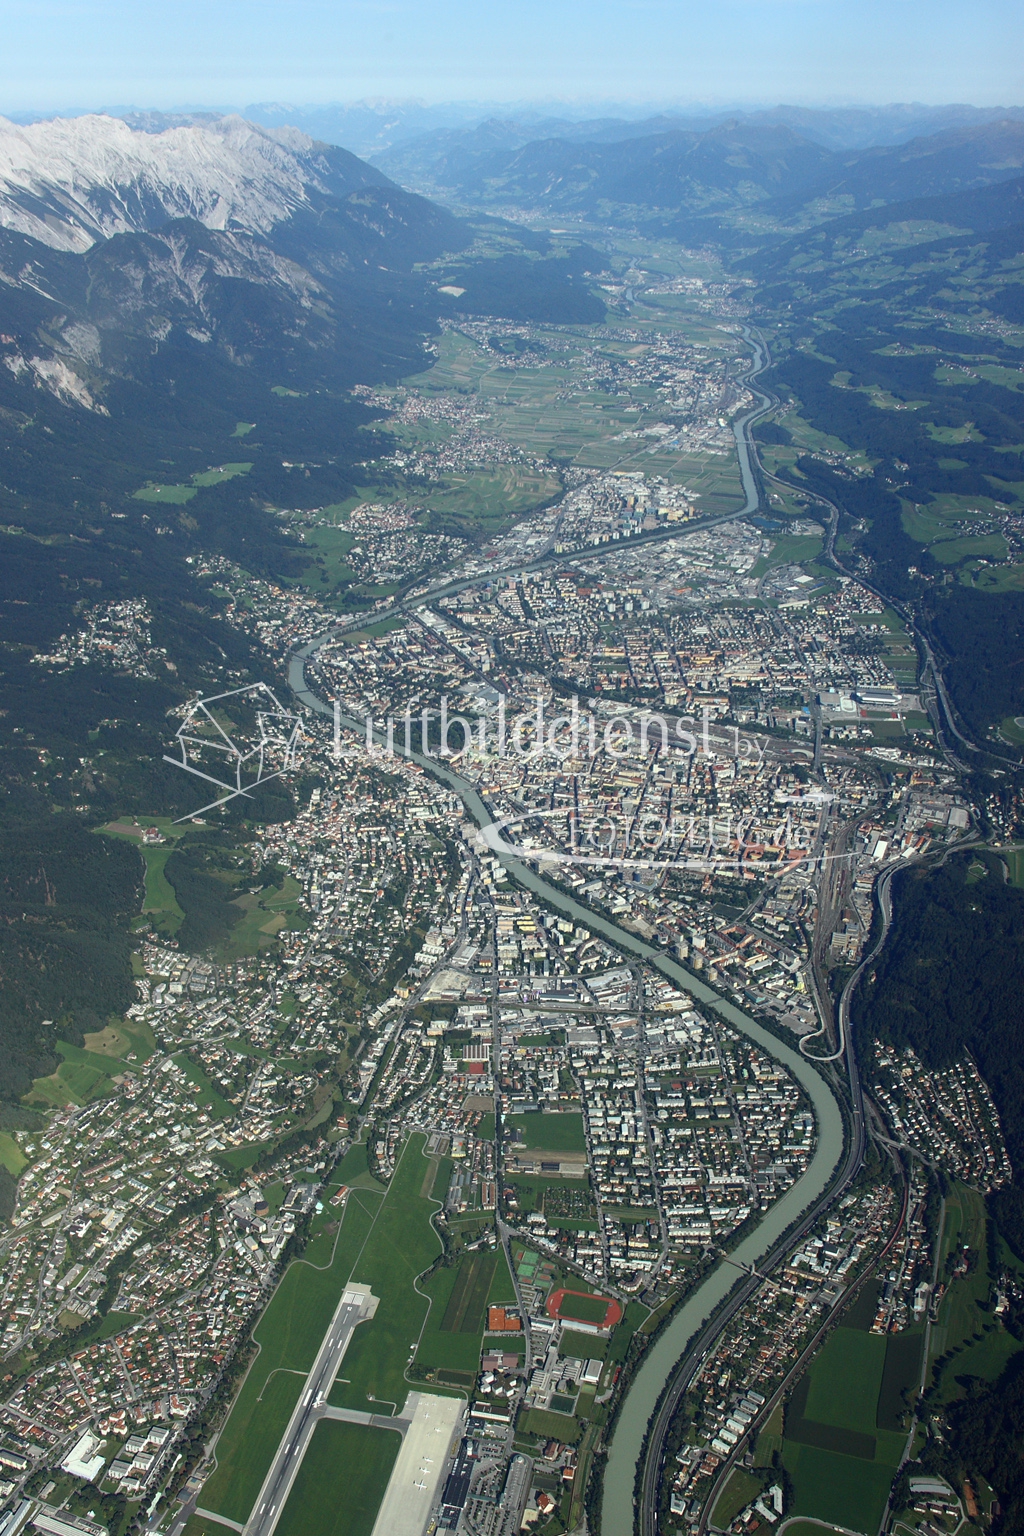 08_18430 09.09.2008 Luftbild Alpendurchquerung Innsbruck